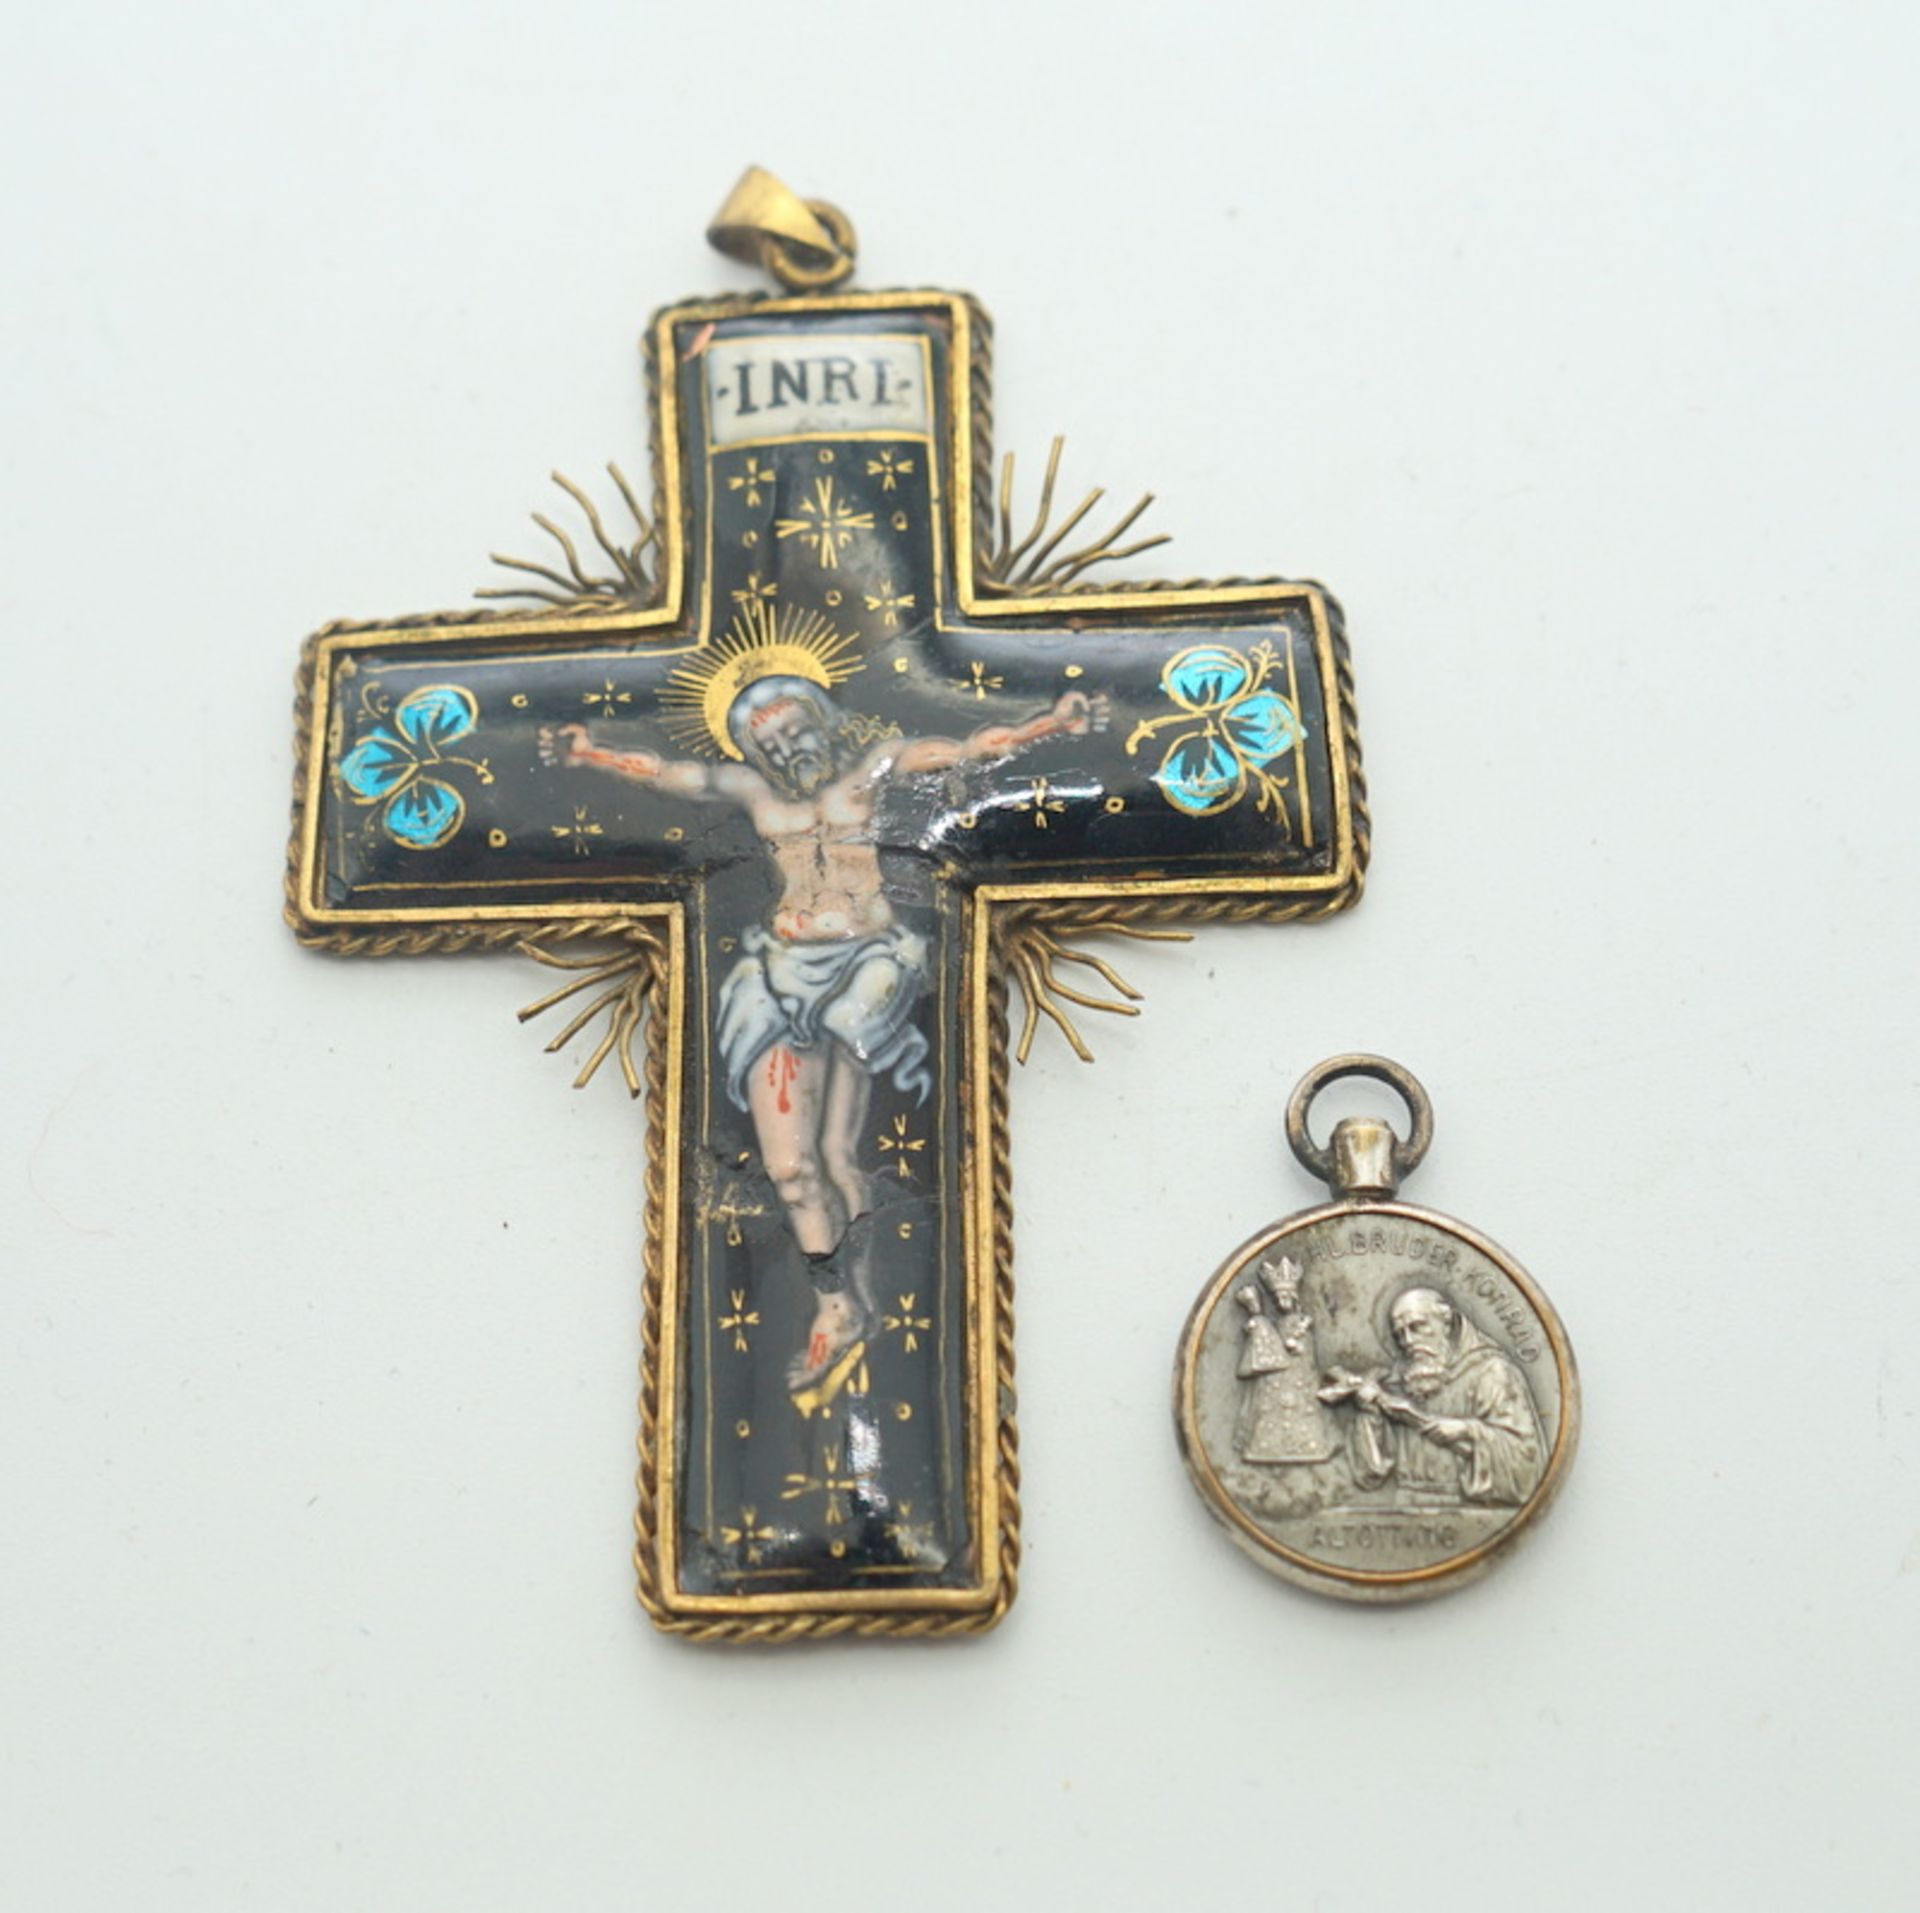 Kreuz - Messing mit Emaillemalerei, wohl Limoges 17./18.Jh.